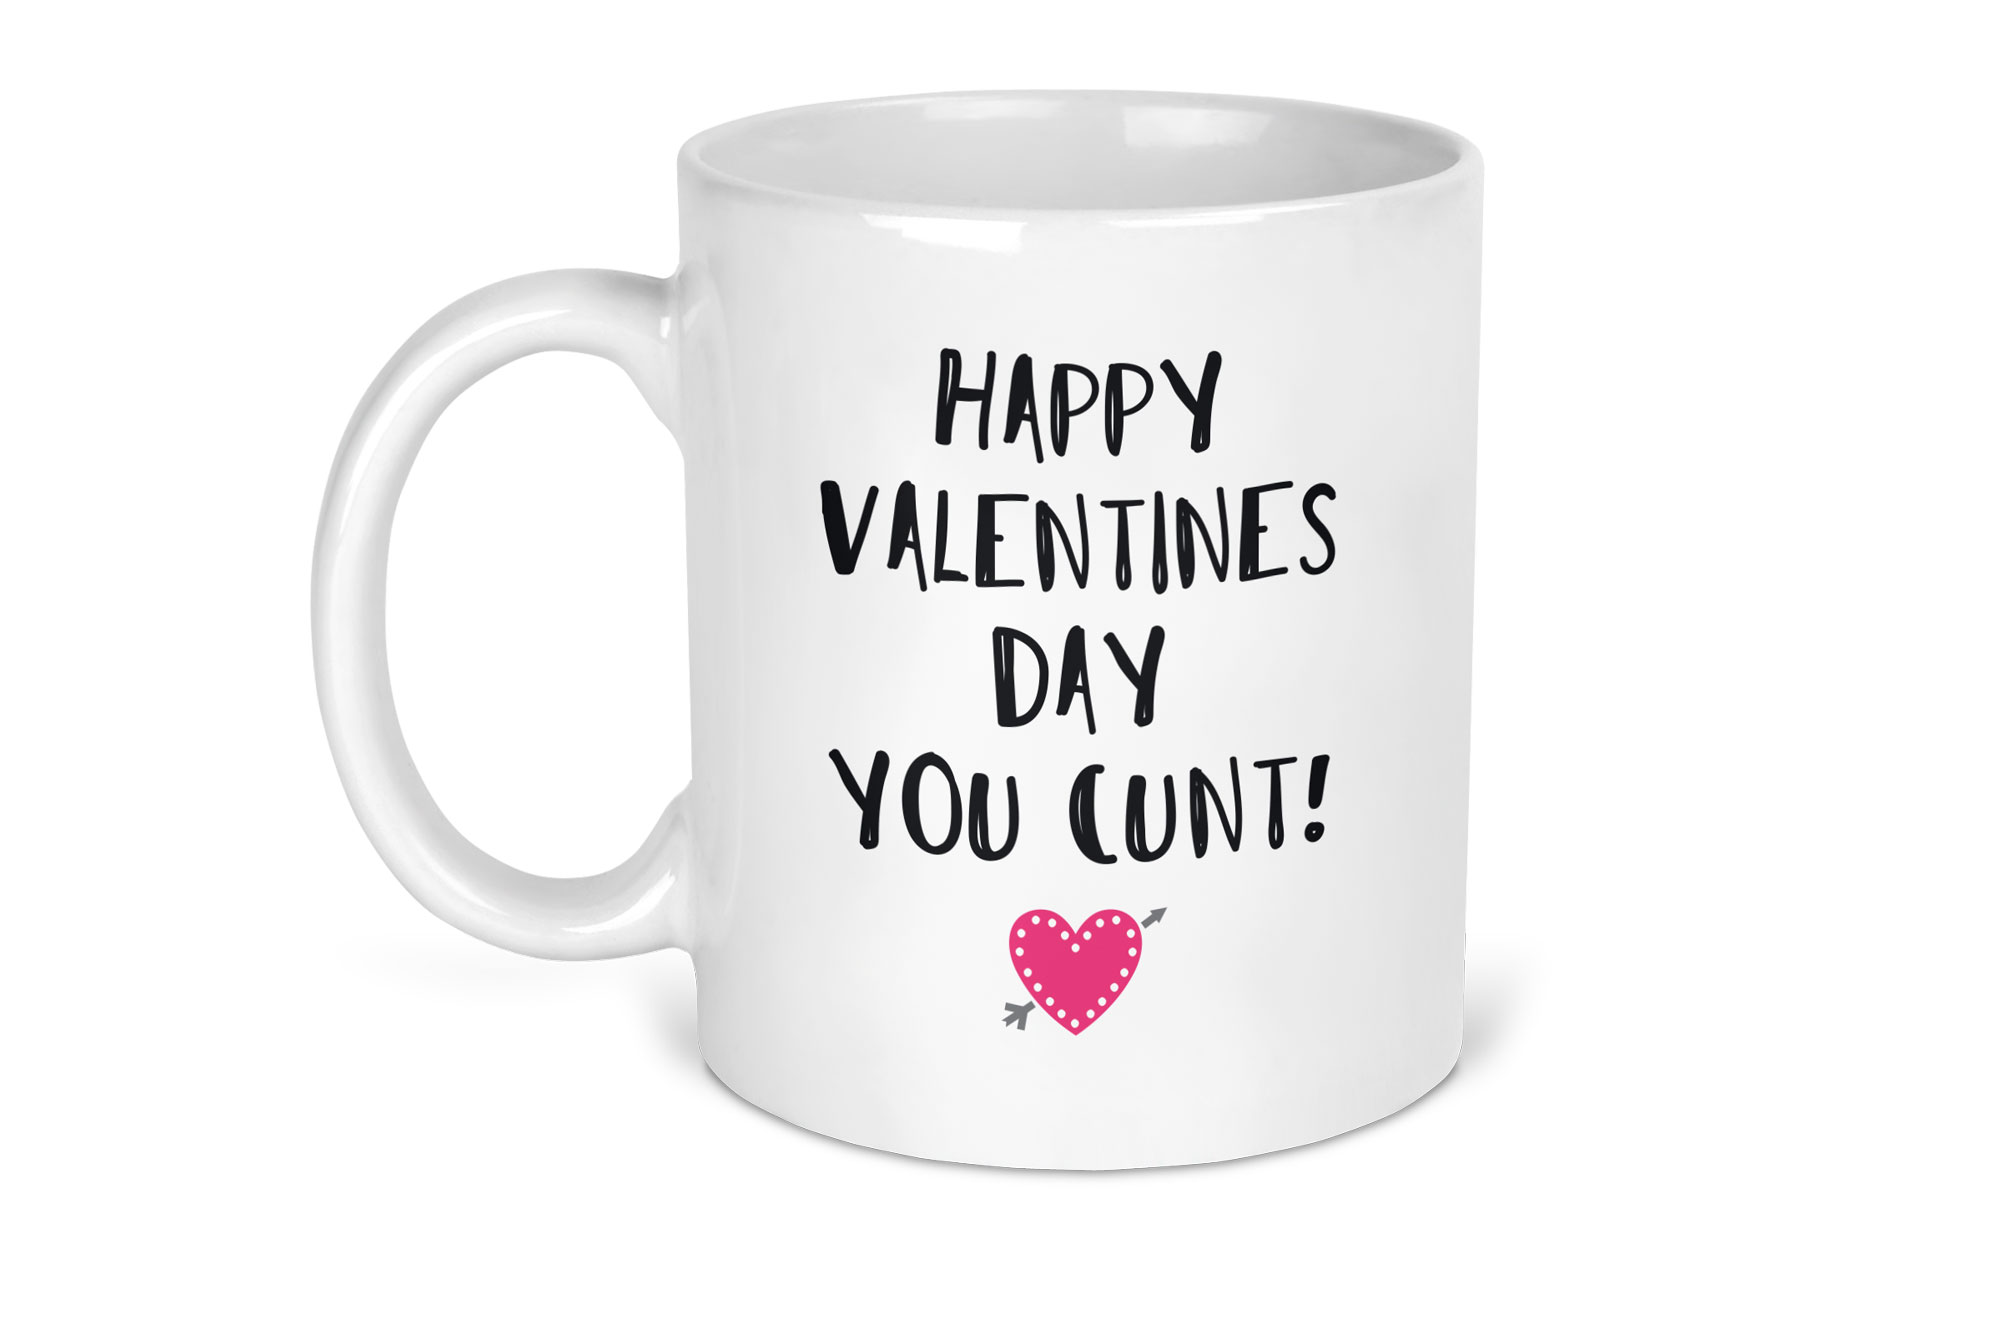 Happy Valentines Day You C**t Rude Adult Novelty gift Mug